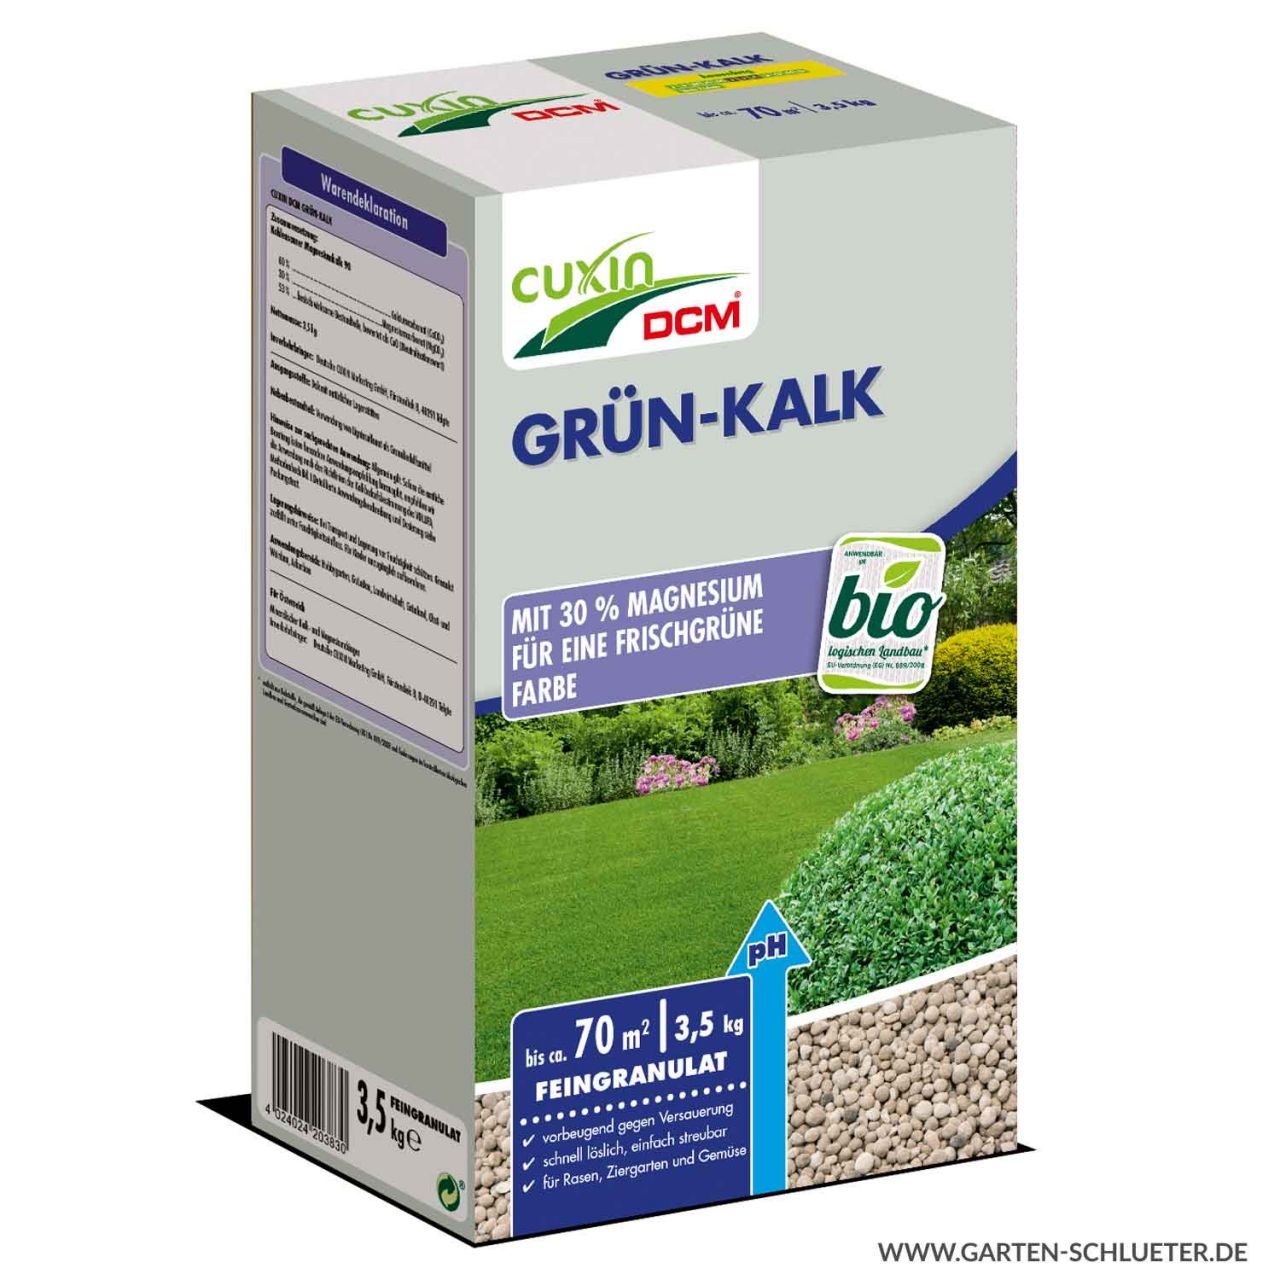 Cuxin – Grünkalk – 3,5 kg